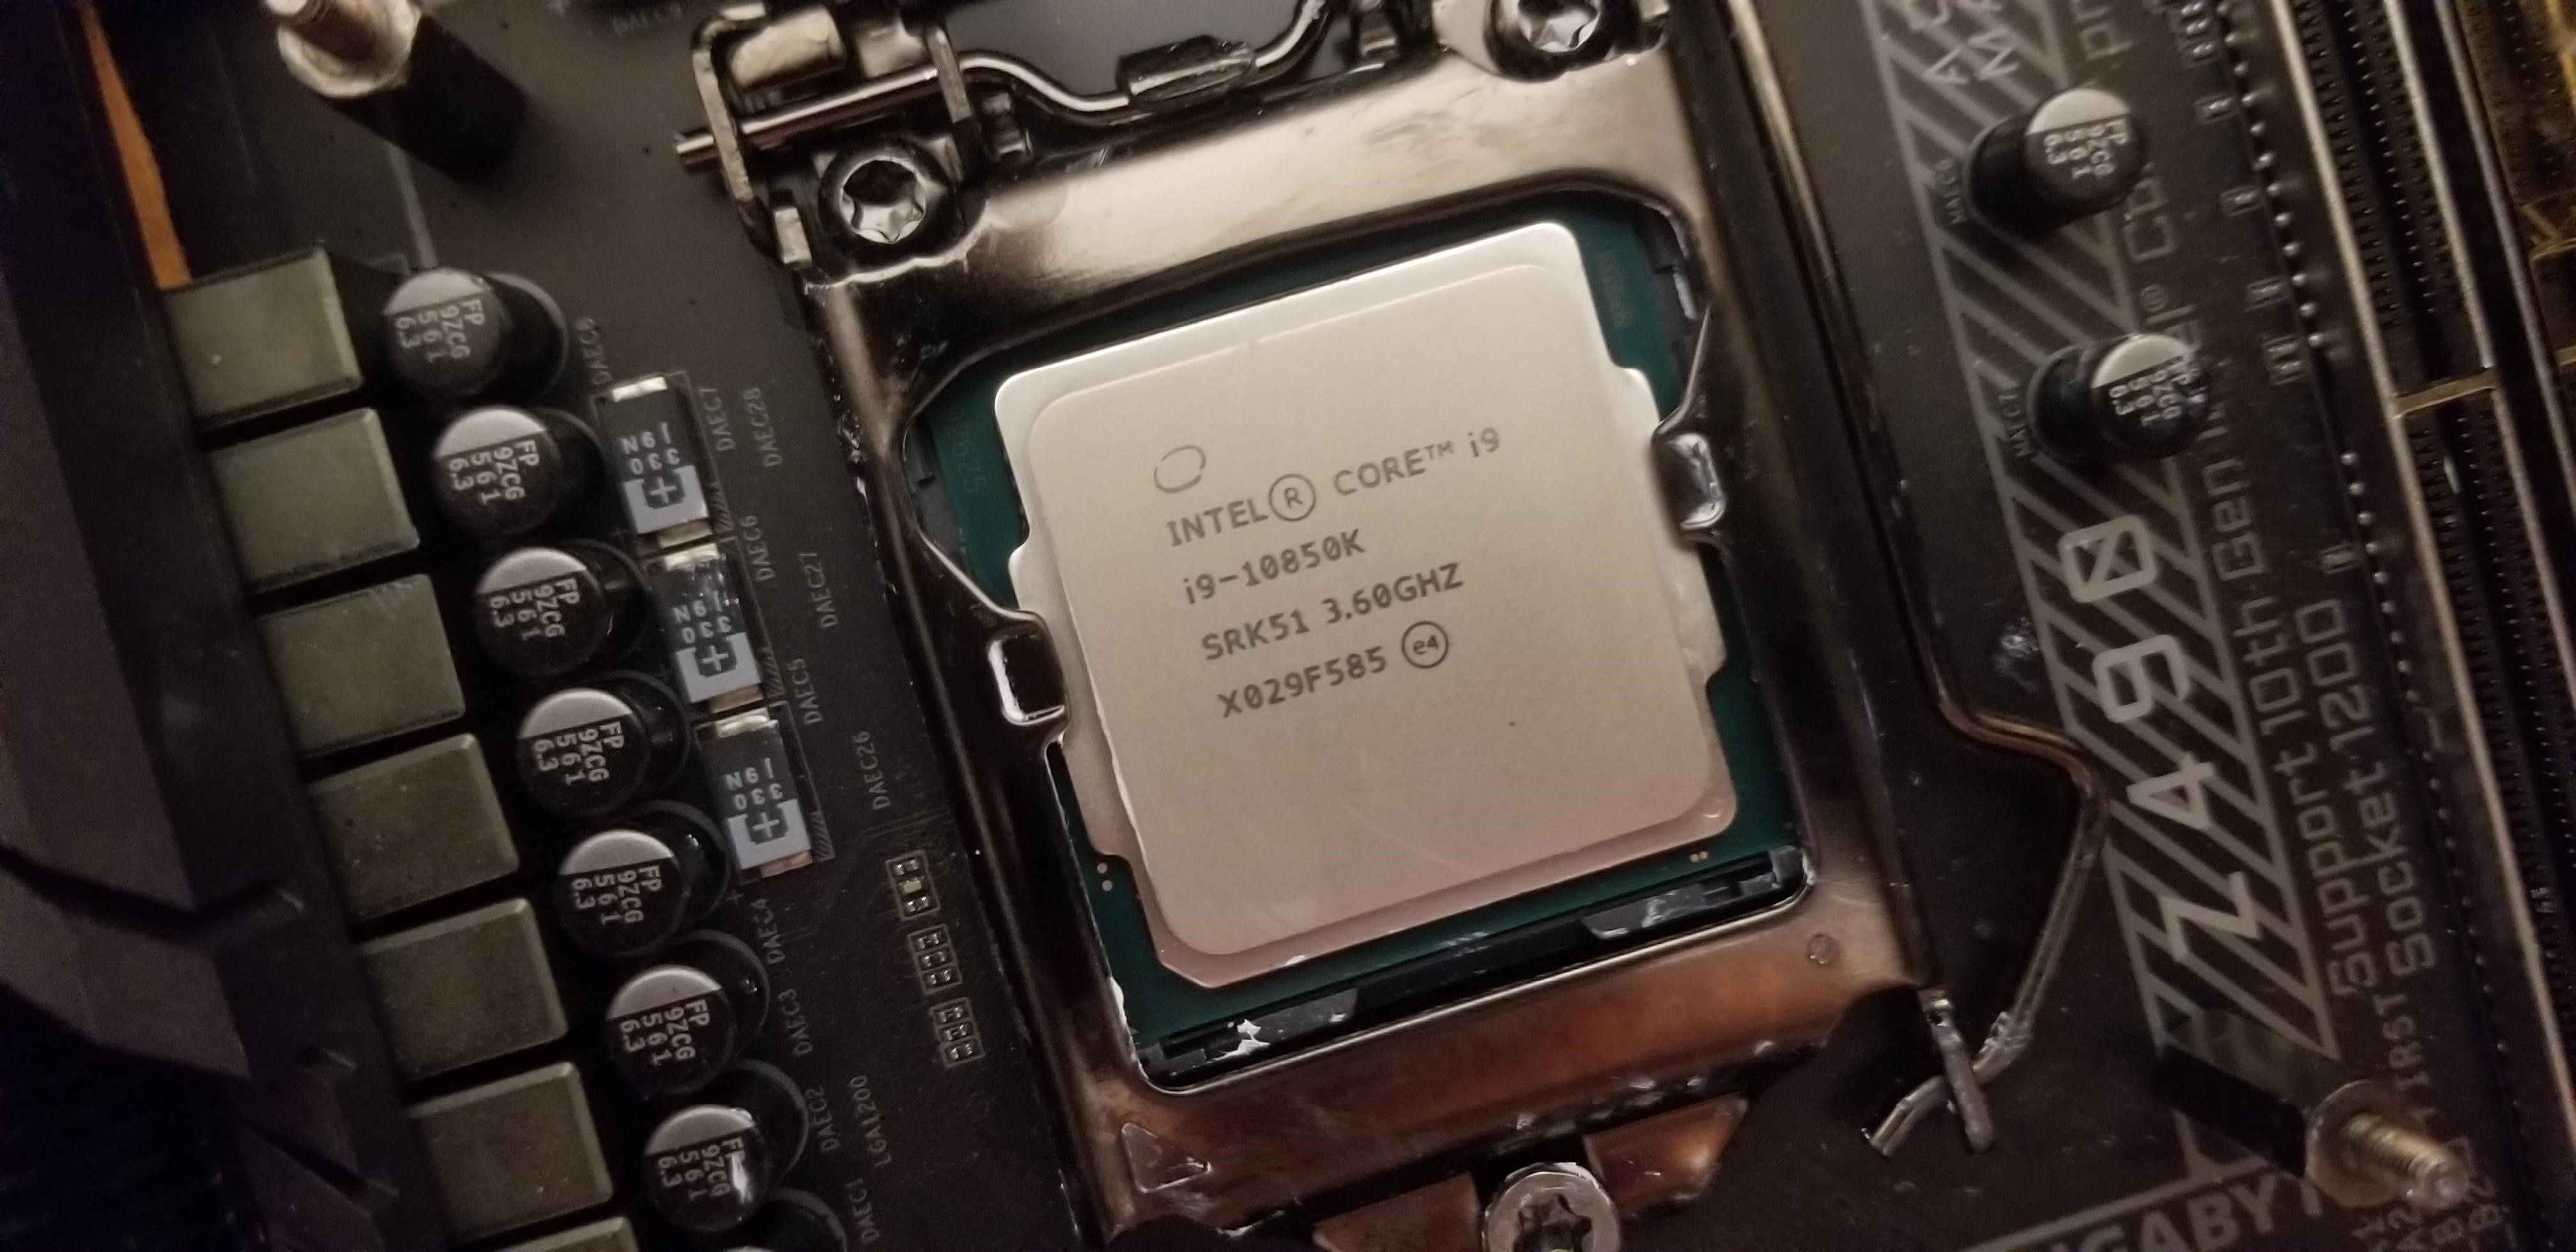 Intel Core i9-10850K CPU Review: Cheaper, but Nearly Identical ...